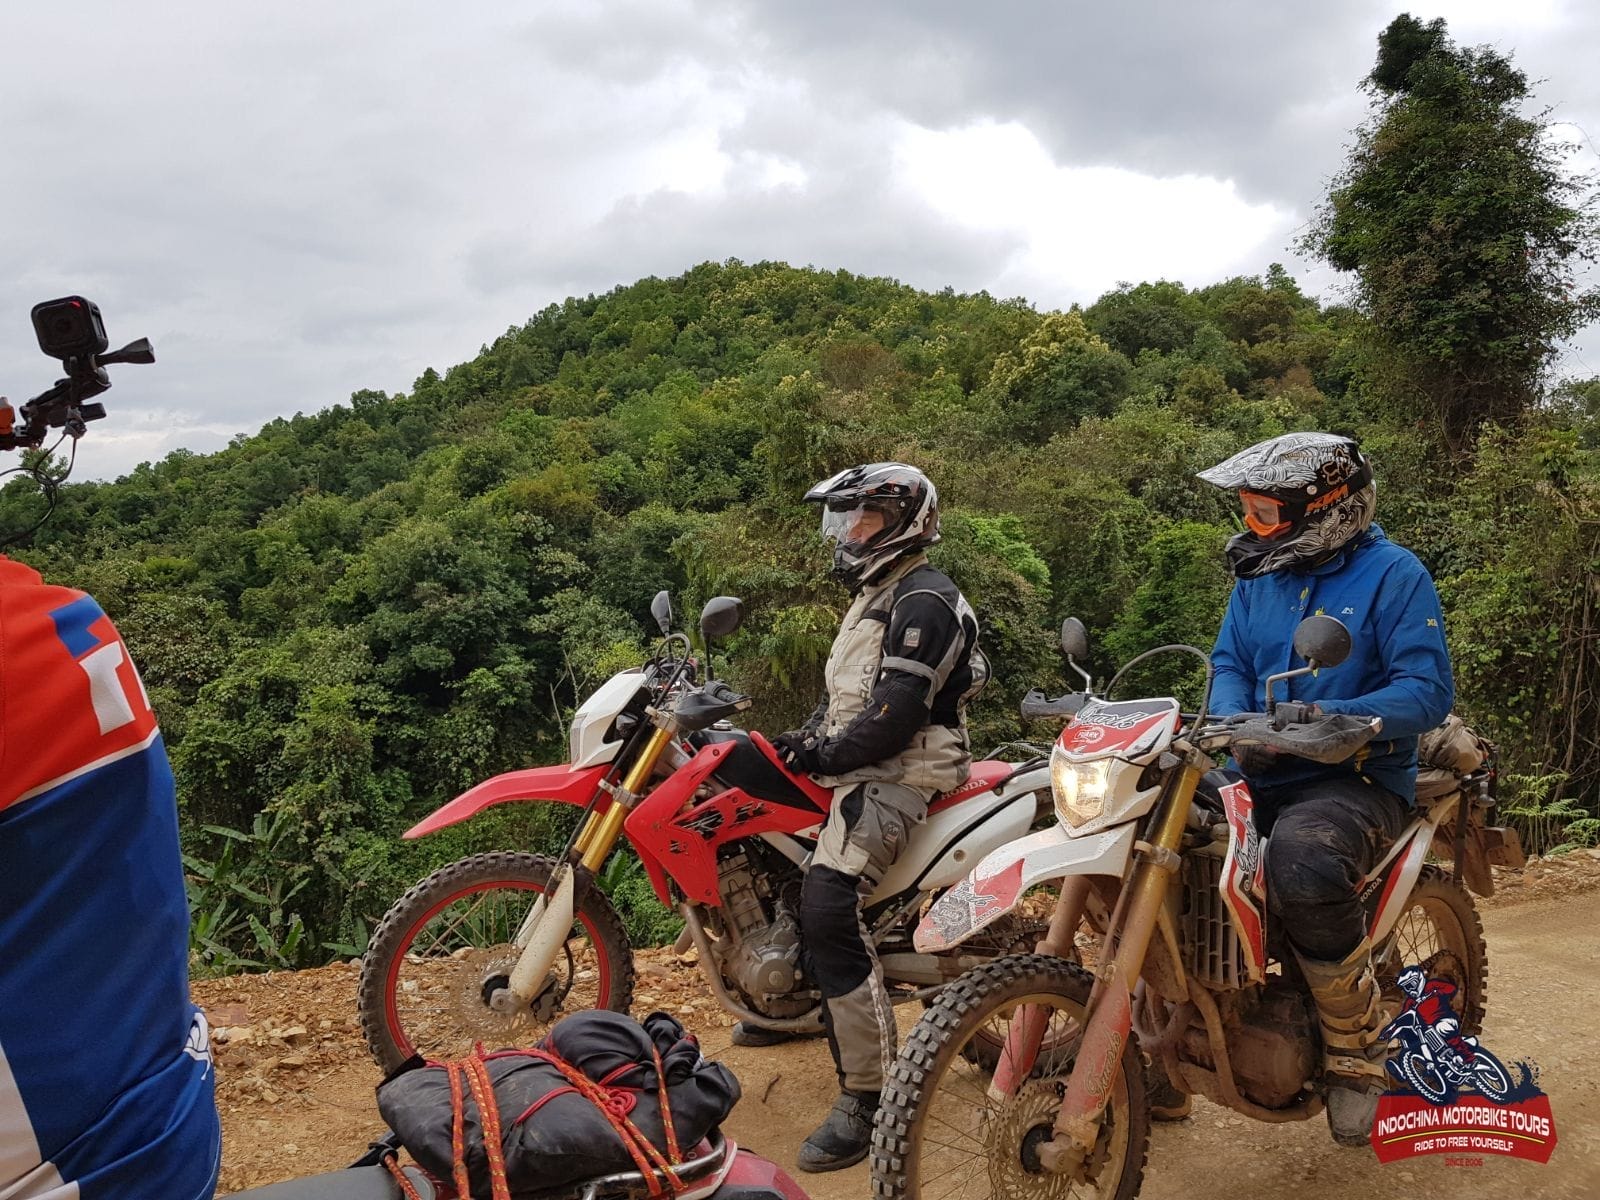 Laos Offroad Motorcycle Tour 5 - Luang Prabang Motorcycle Tour to Jungle Trails, Plain of Jars